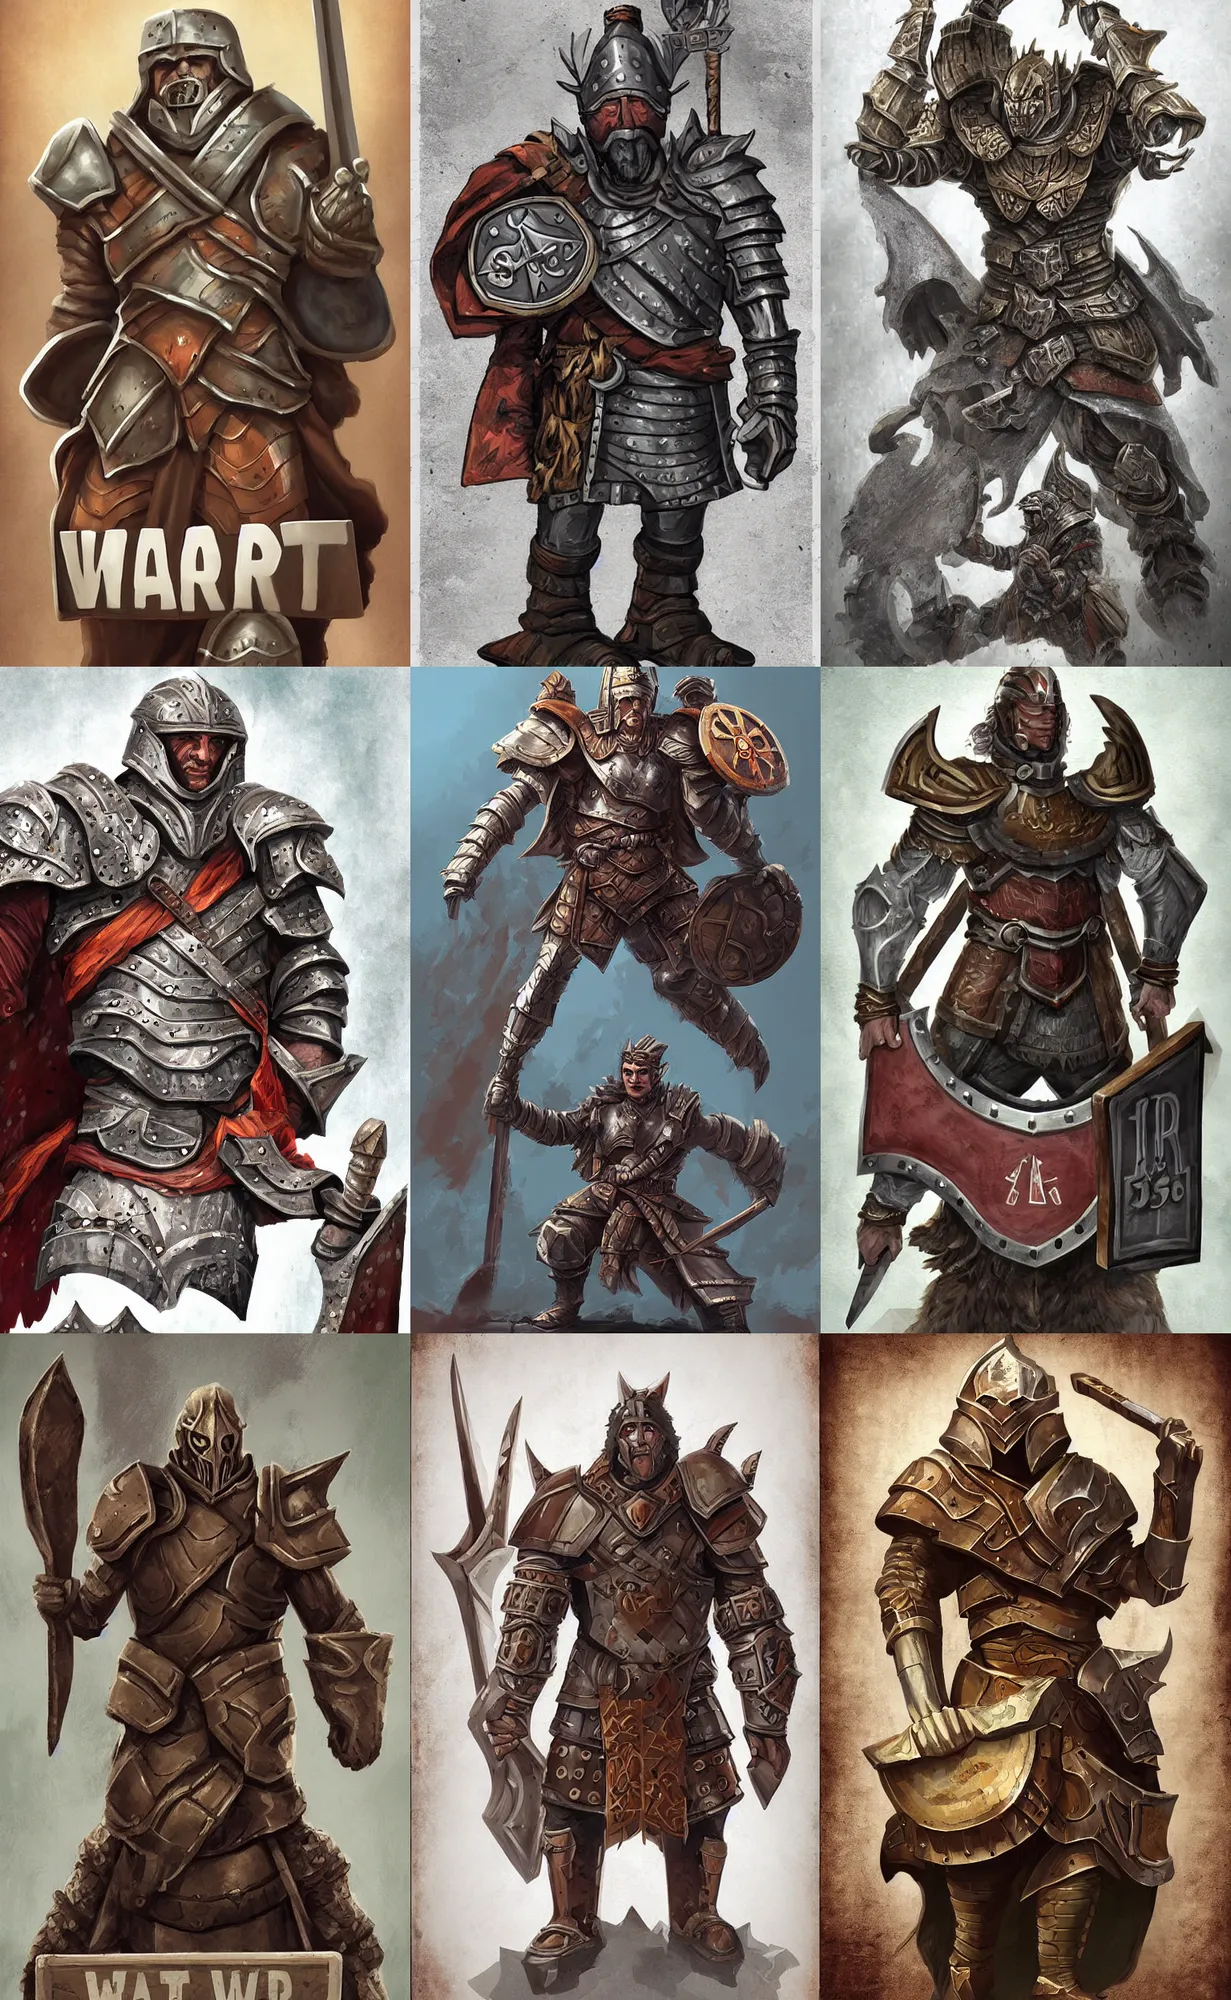 Prompt: giant war champion wearing road sign armor, d & d, digital art